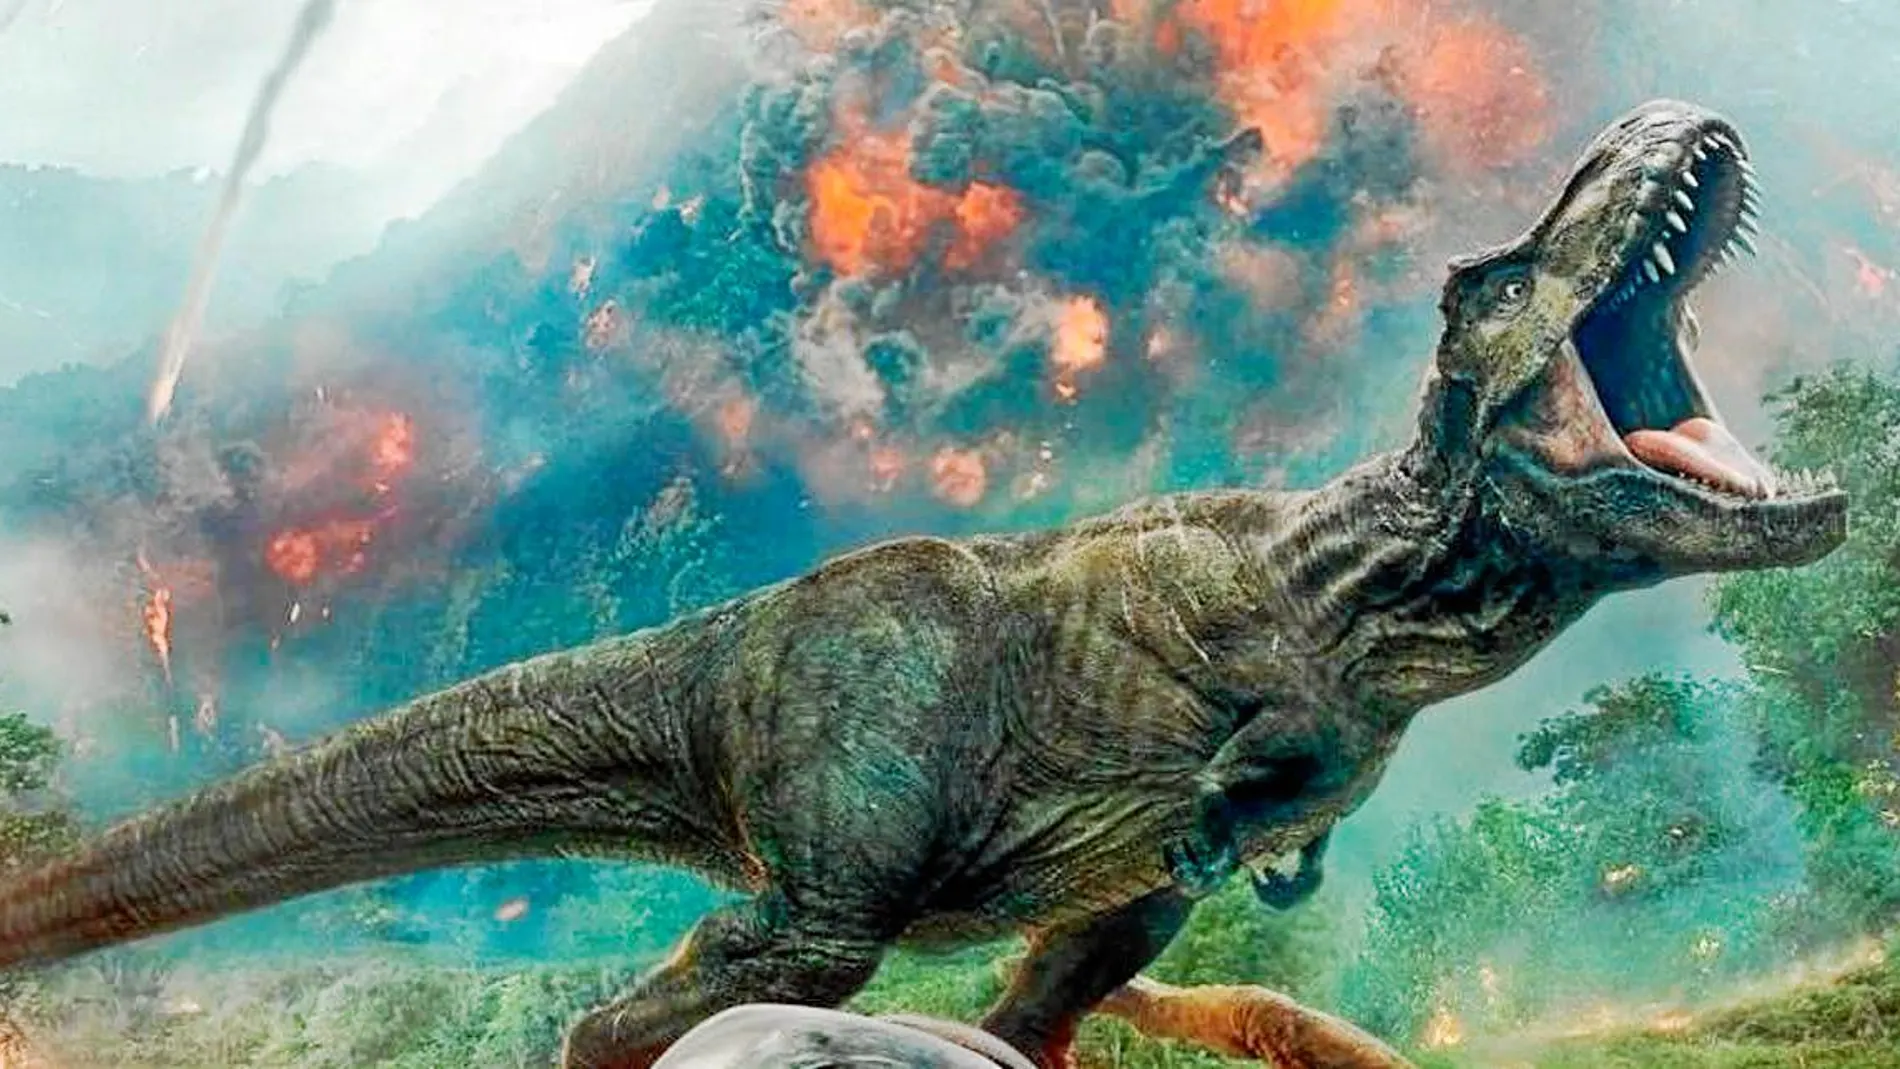 Dinosaurios: ni son tan antiguos ni se extinguieron